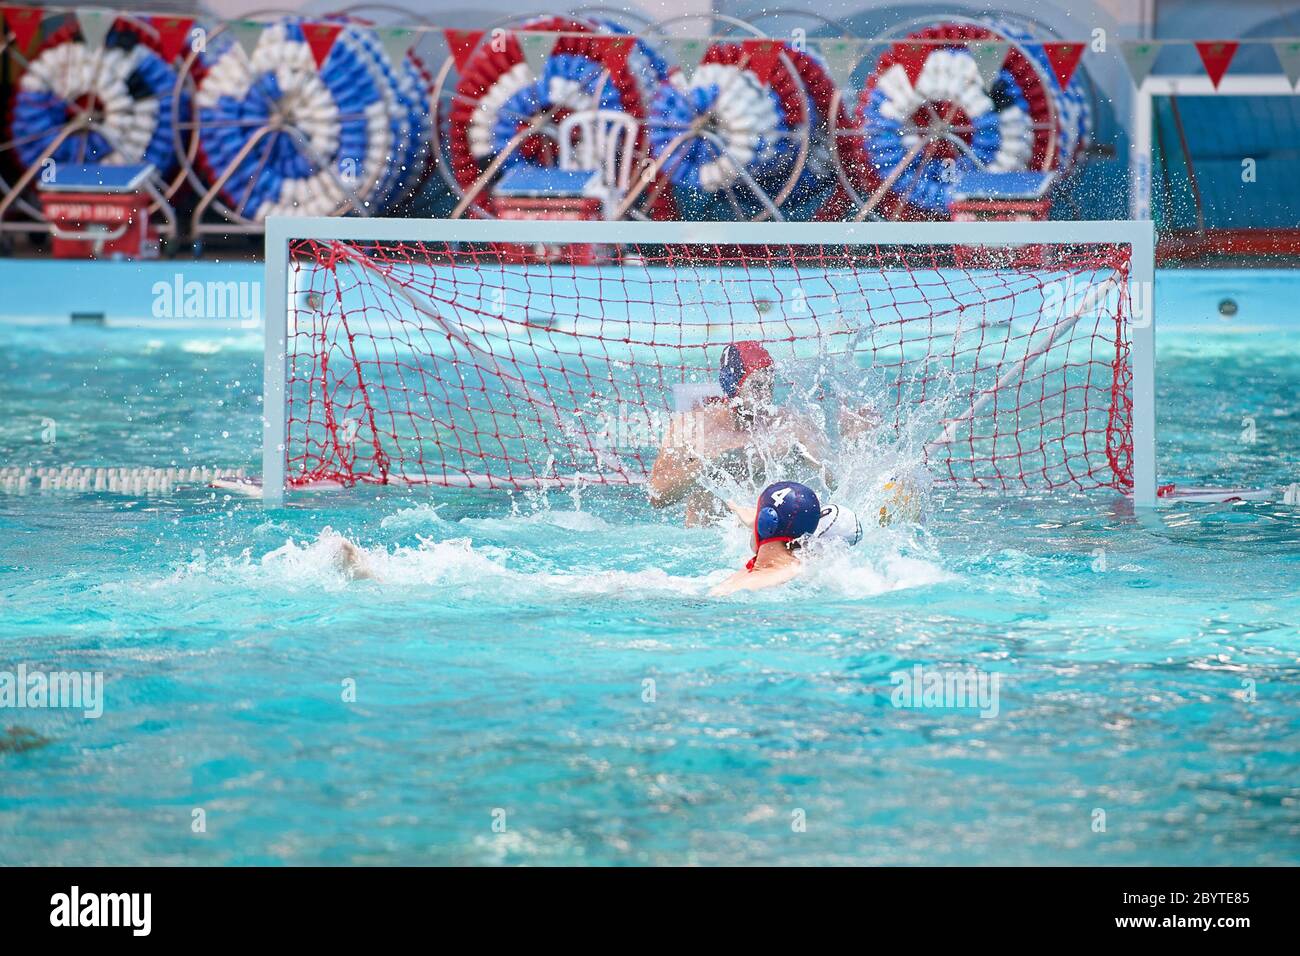 Water polo player in a swimming pool scoring goal splashing water Stock Photo